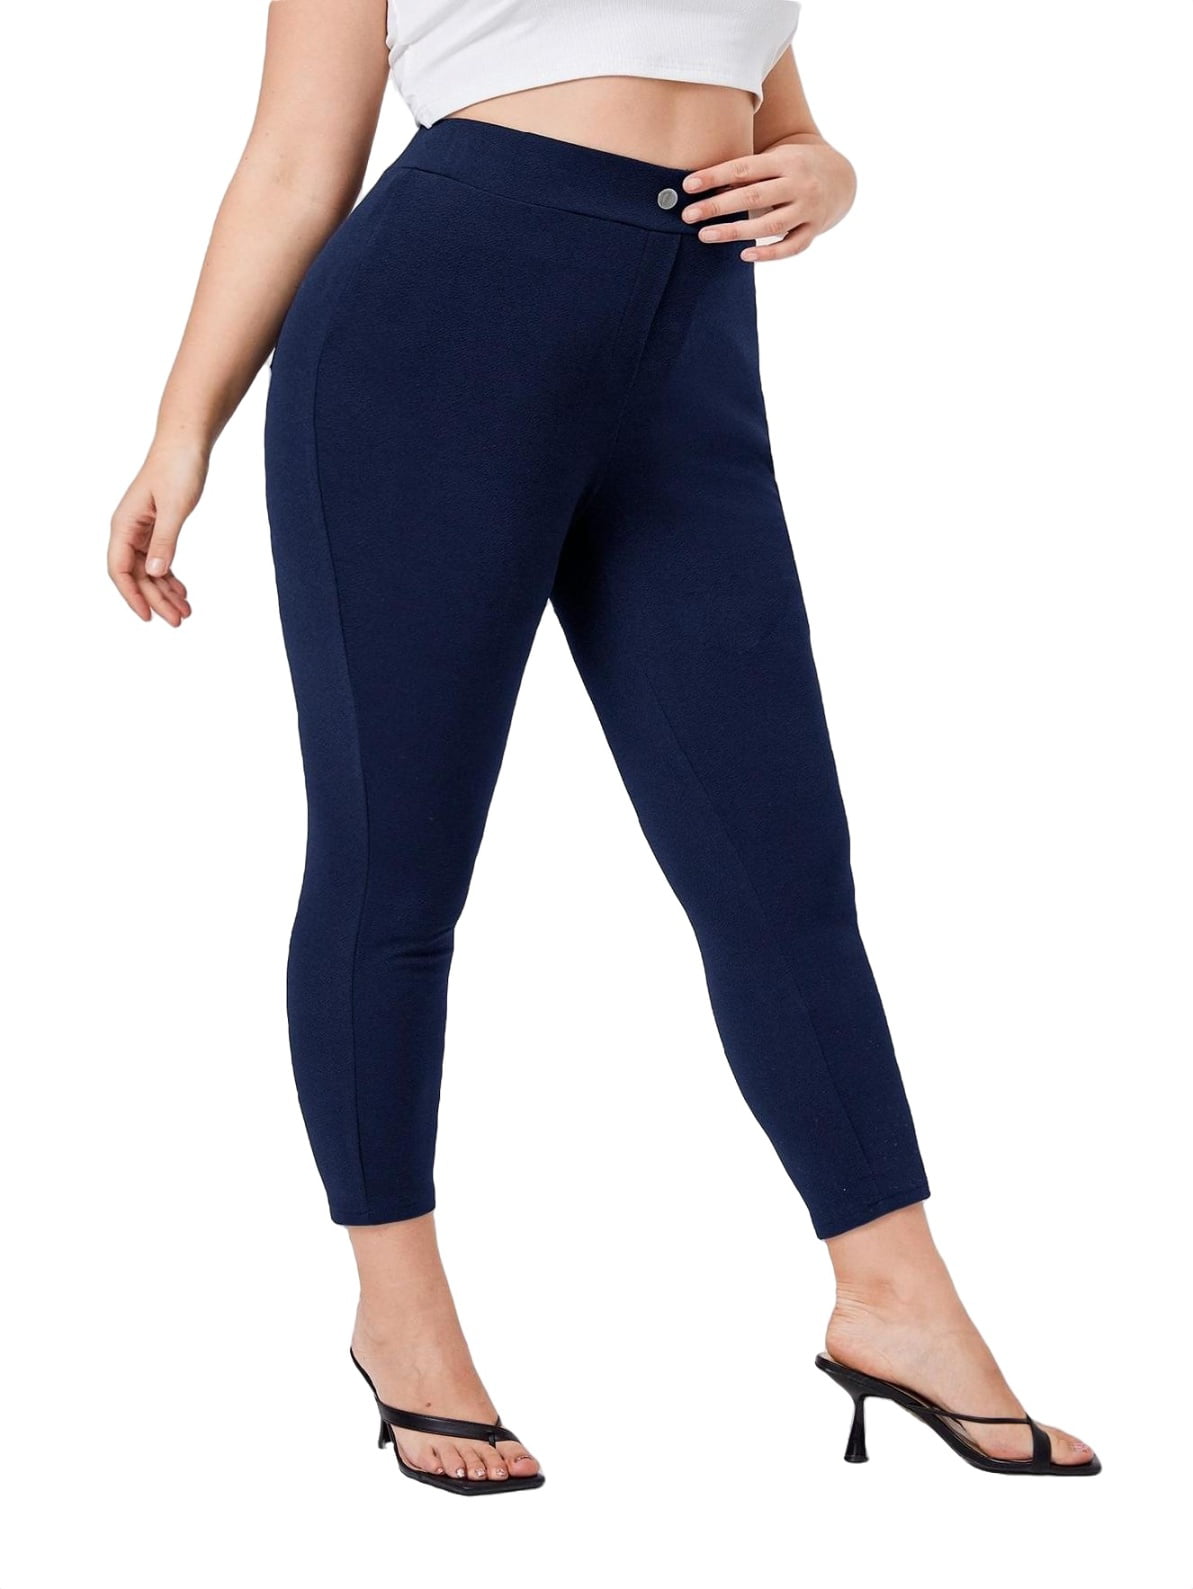 Navy blue trousers women - Plus size - Straight leg 2 back pockets - Belore  Slims